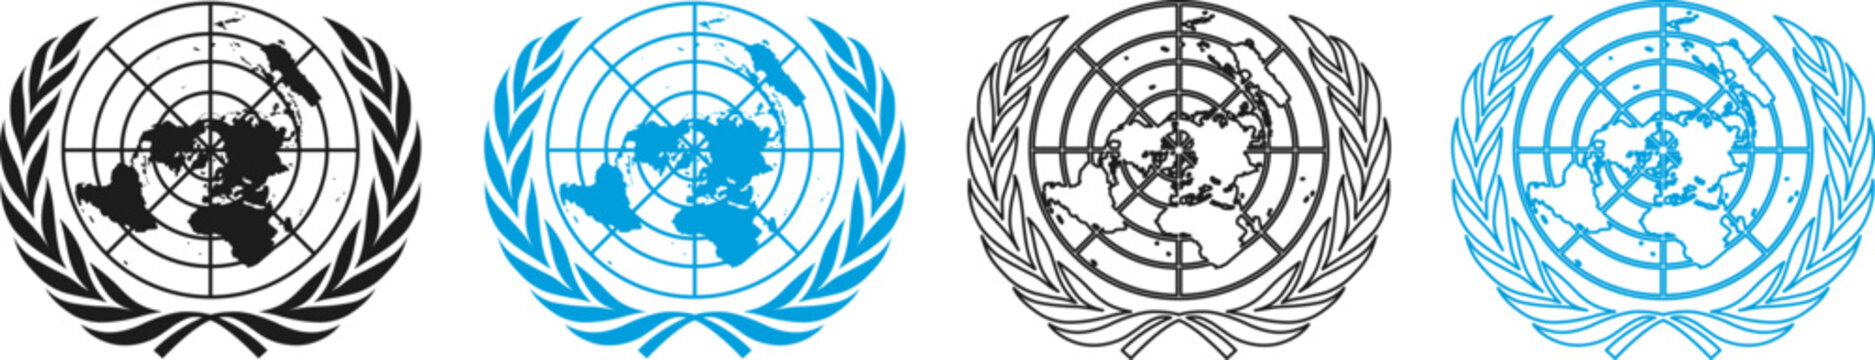 United Nations logo. UN icon. Vector illustration